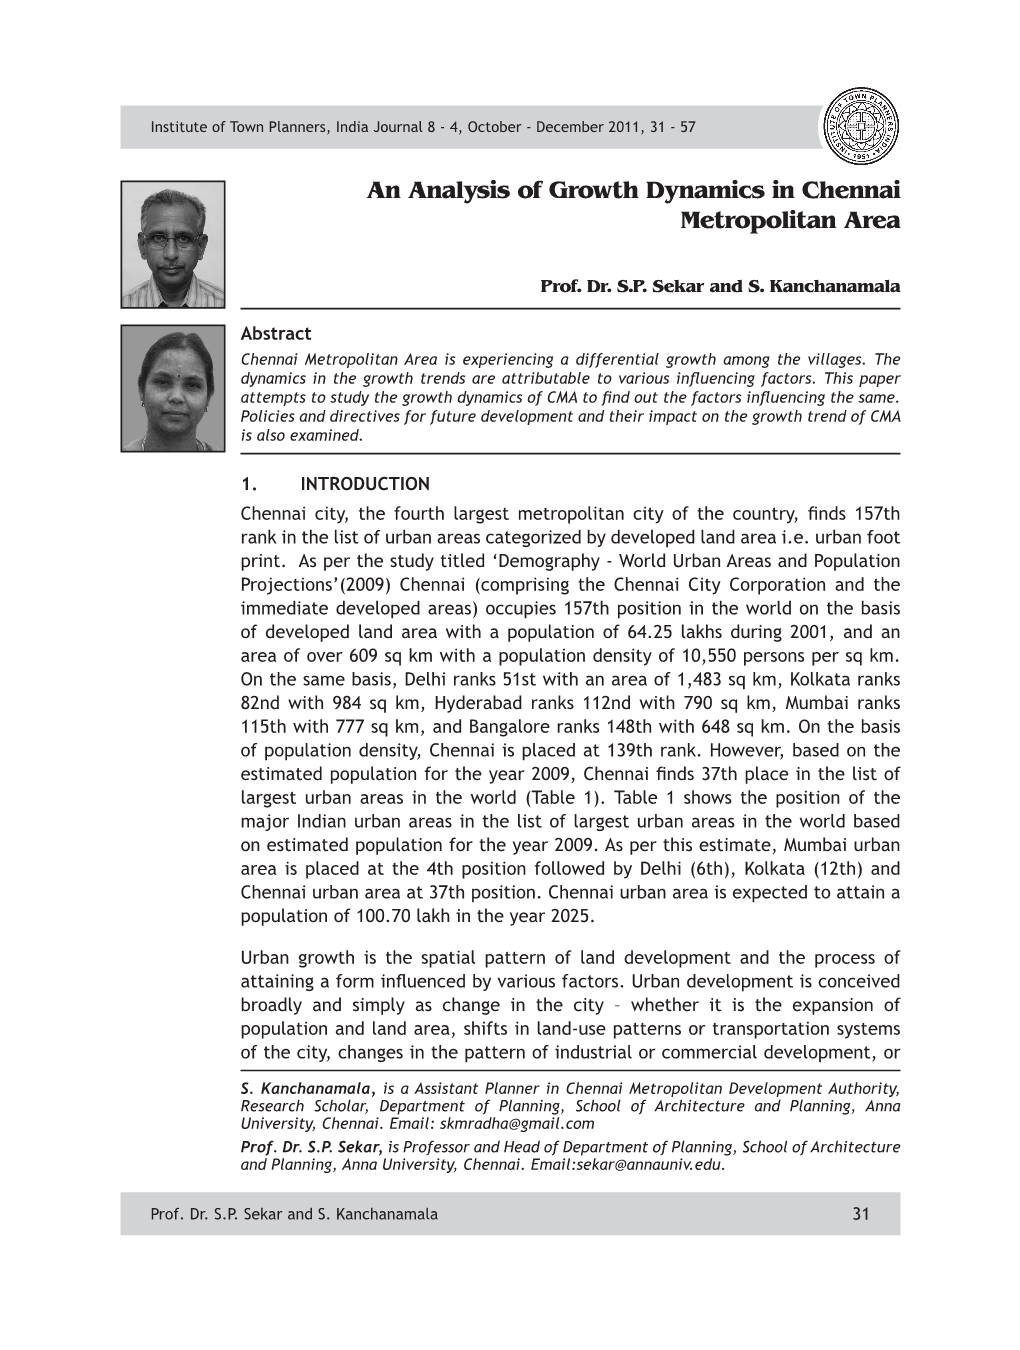 An Analysis of Growth Dynamics in Chennai Metropolitan Area